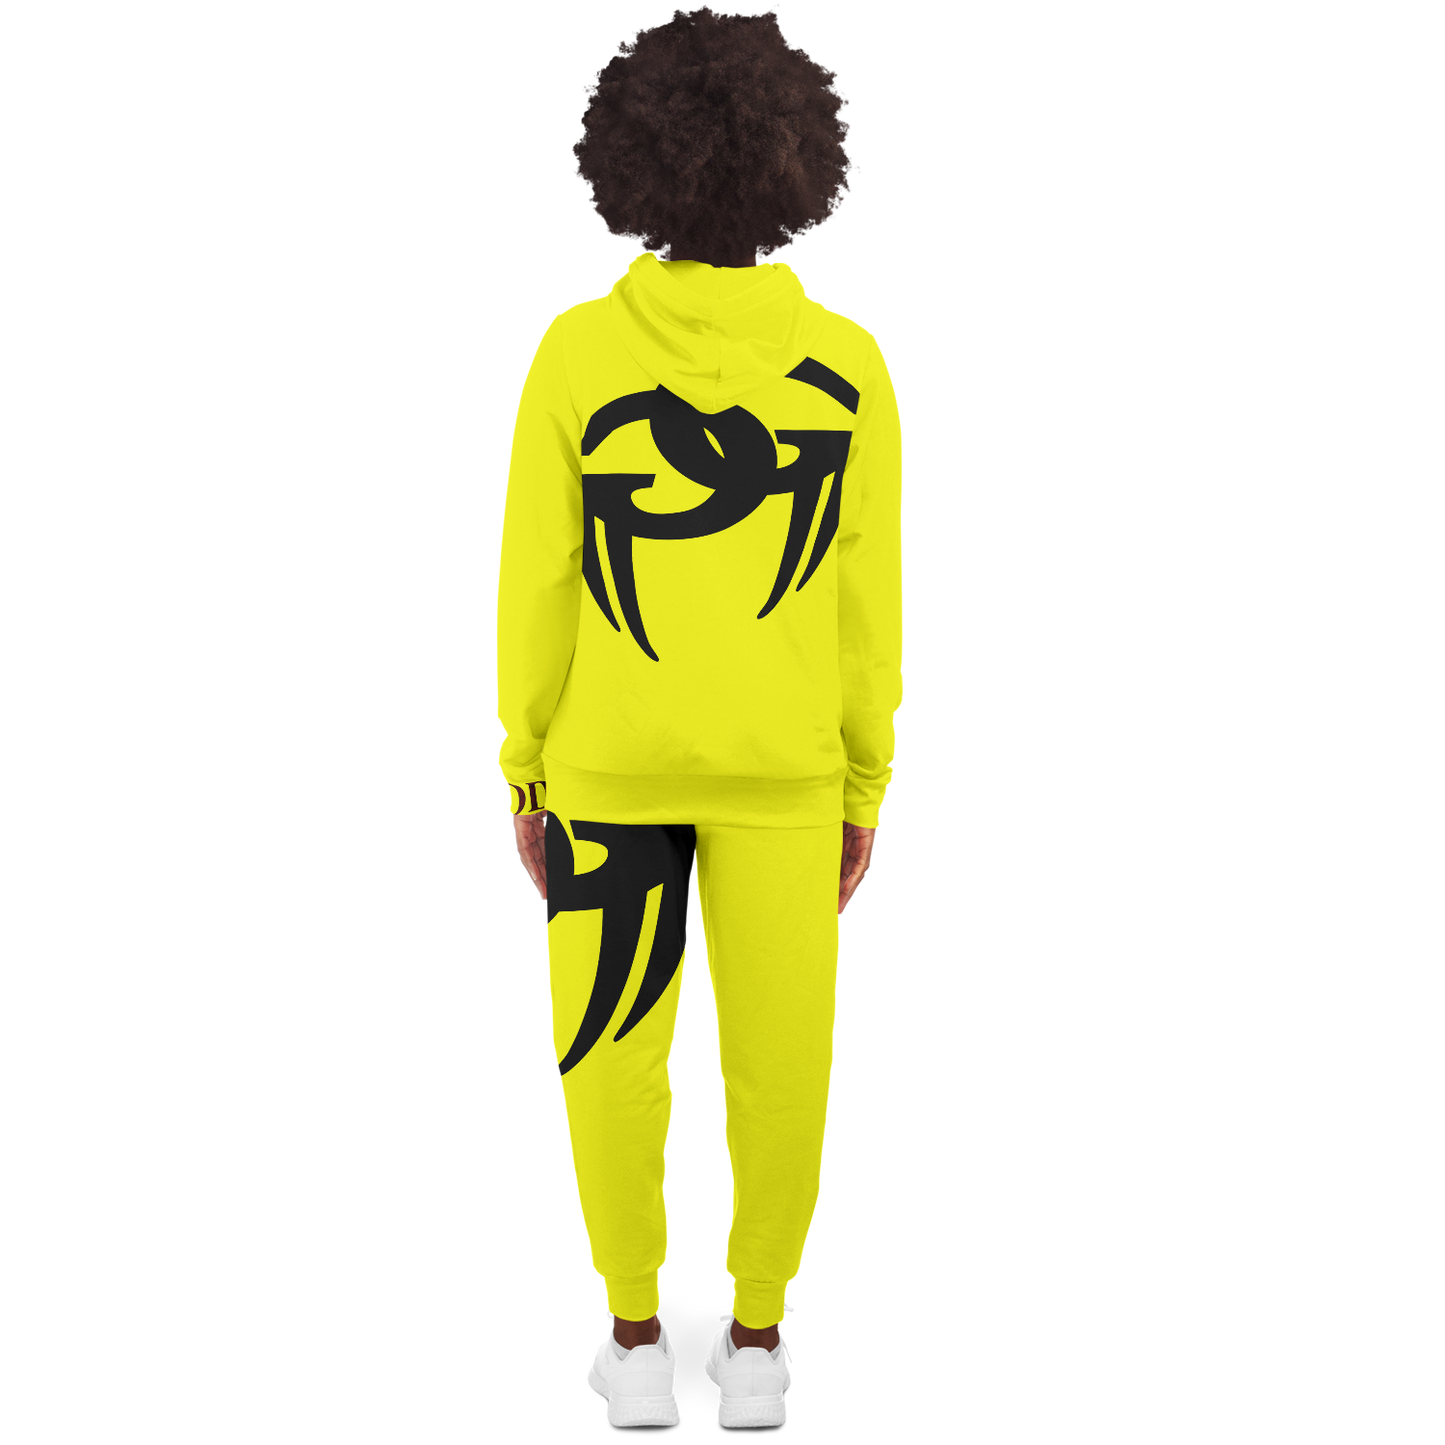 Goddi GG Big Logo Classic Sweatsuit - Yellow